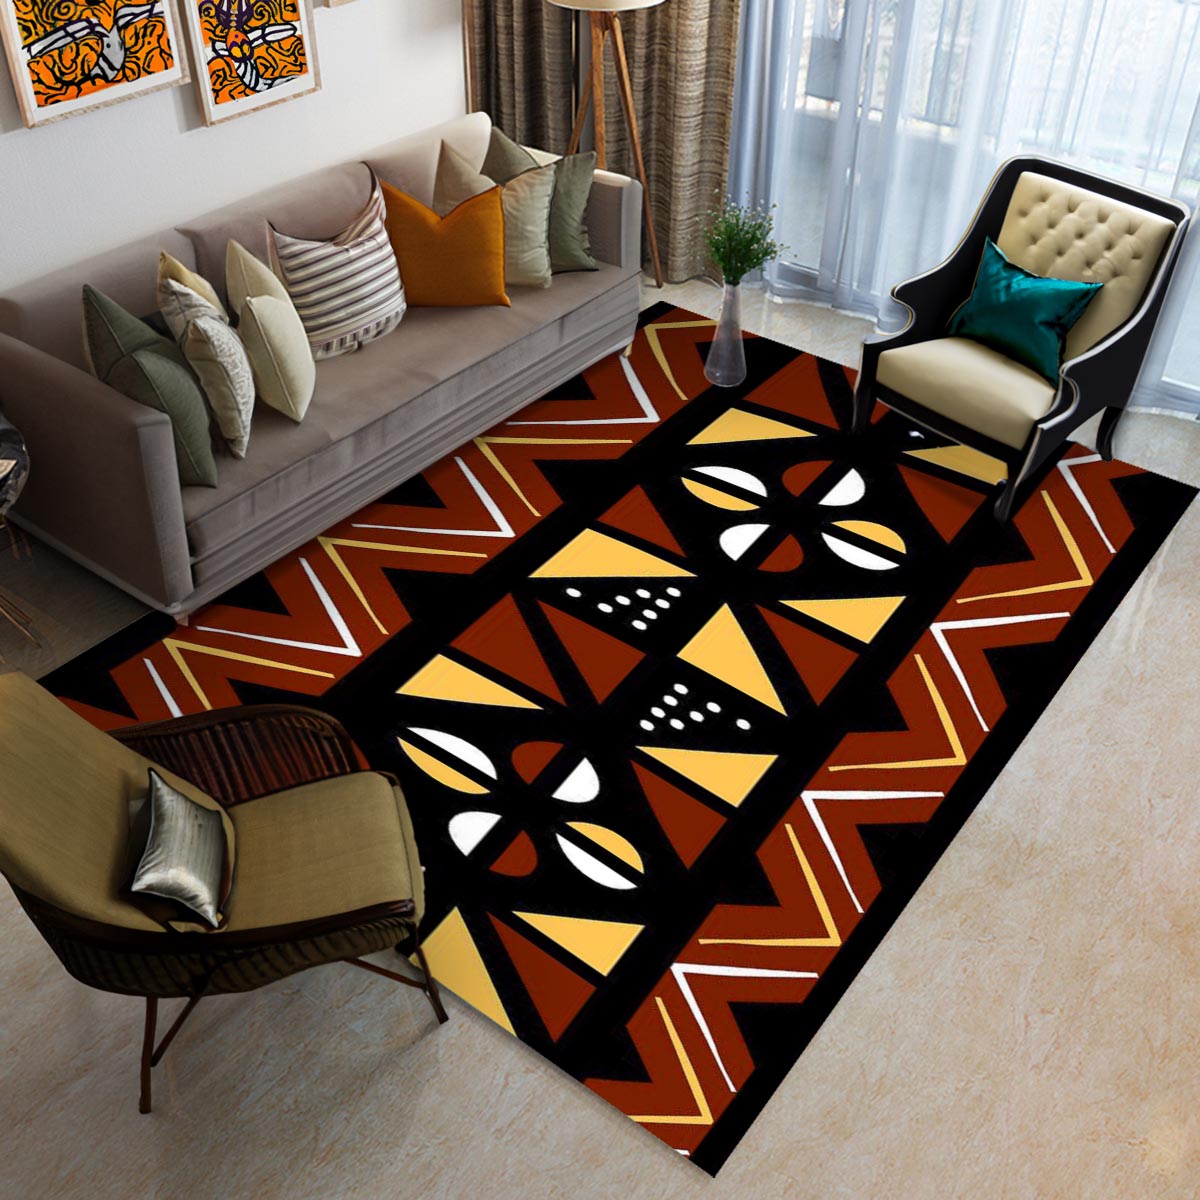 African Mud Cloth Rug - Ethnic Print Carpet Elegance